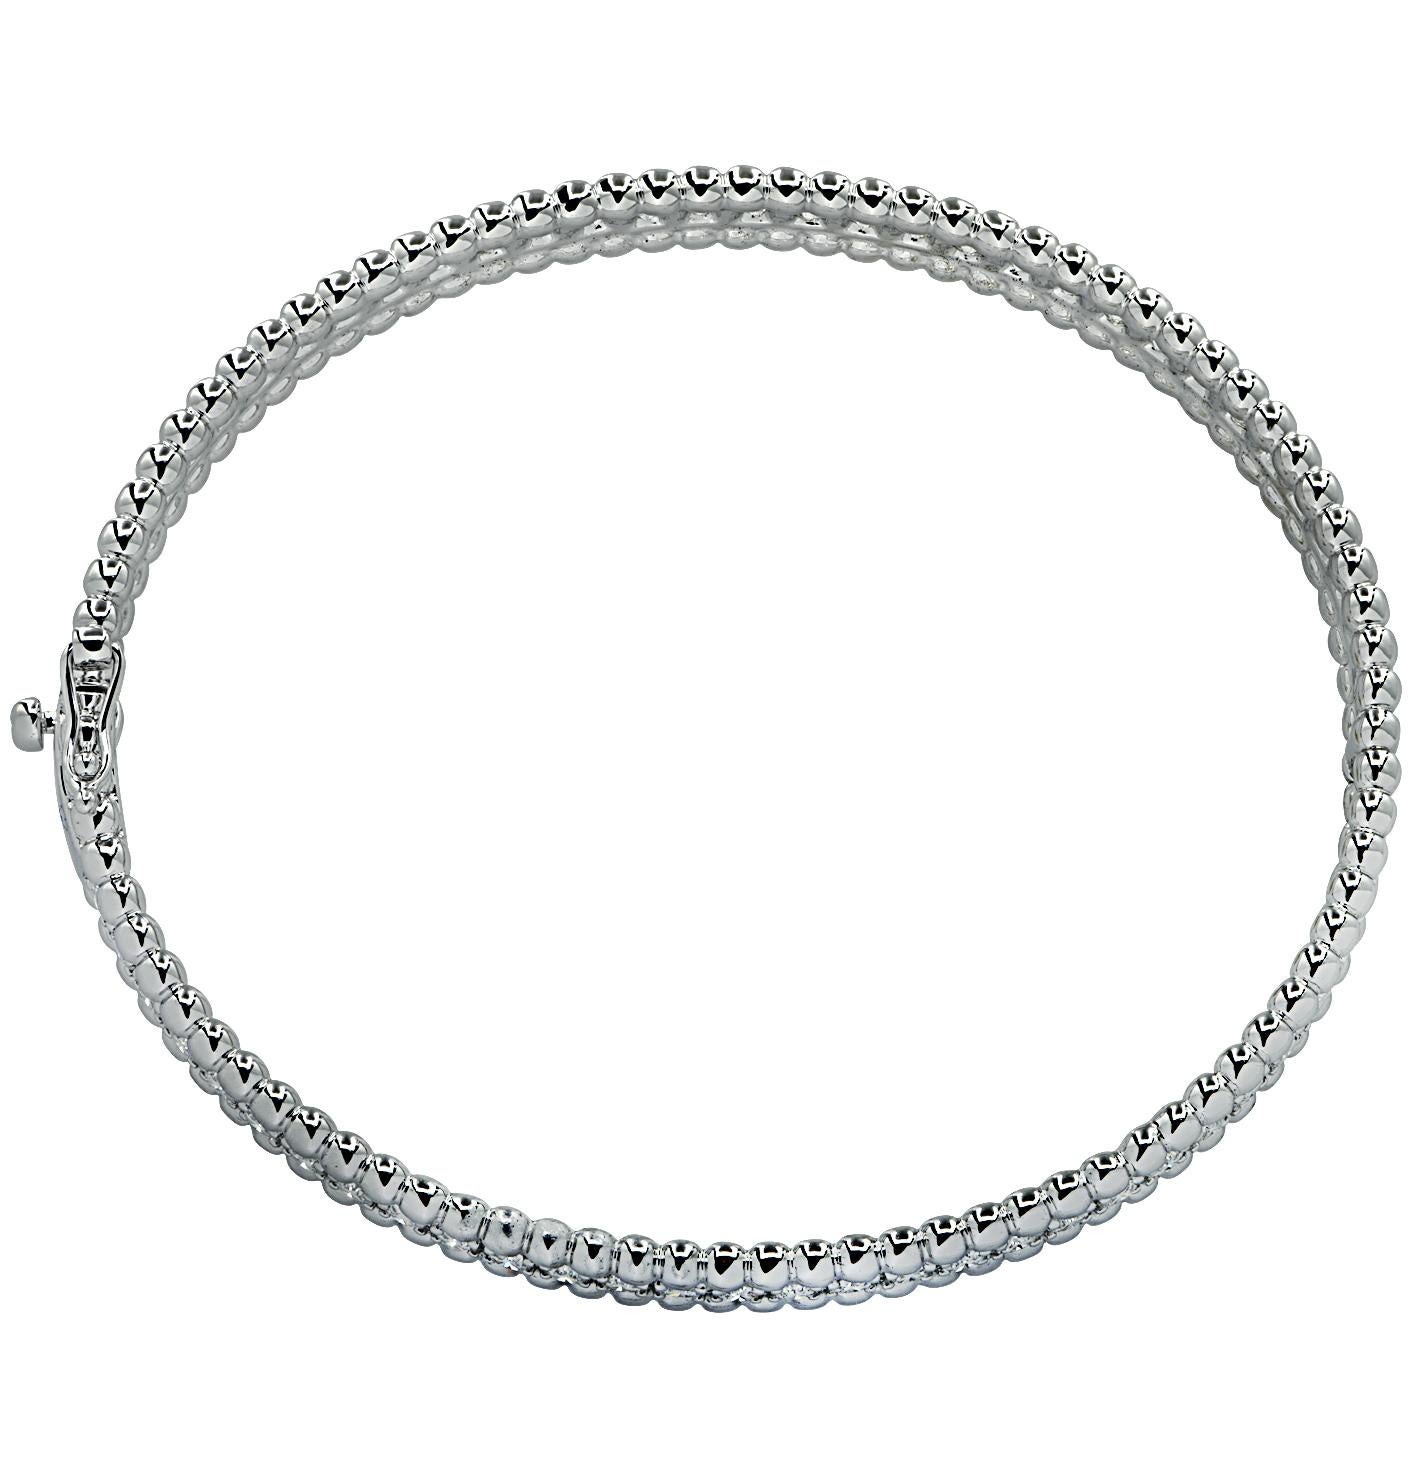 2 carat diamond bangle bracelet